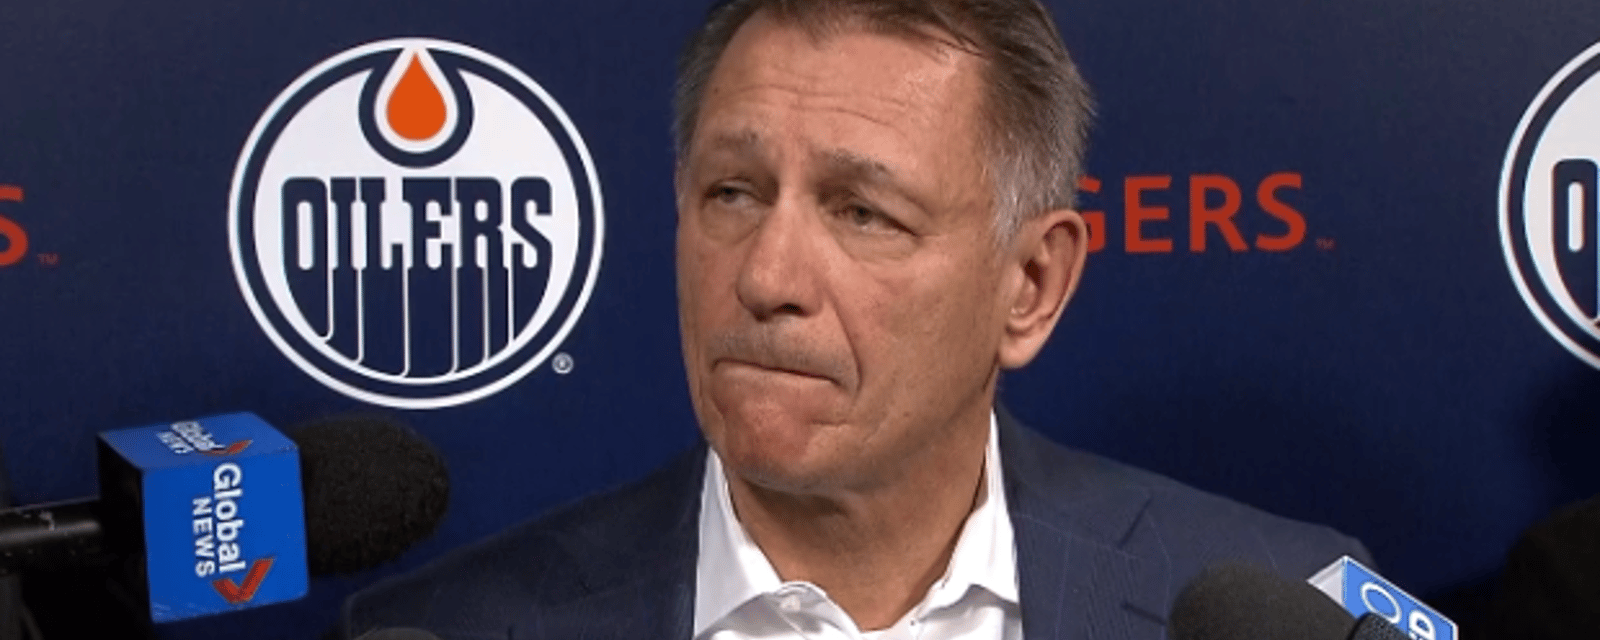 Major deal brewing between Oilers and Flyers? 